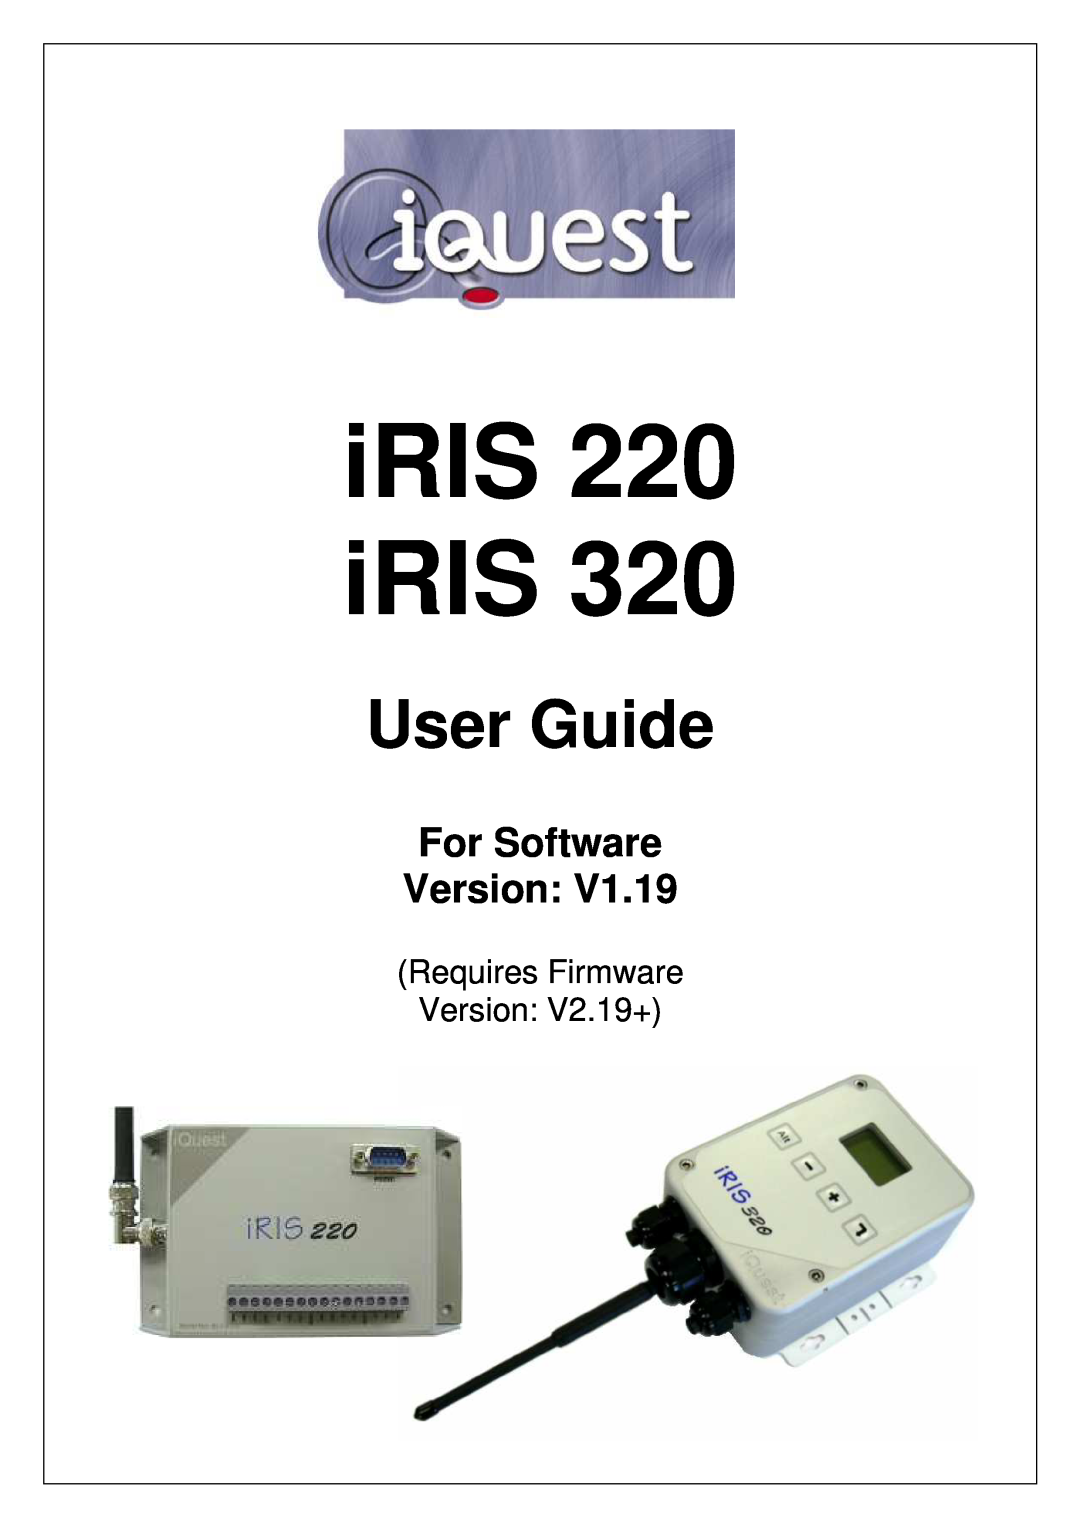 Optiquest iRIS 320 manual iRIS 220 iRIS, User Guide, For Software Version, Requires Firmware Version V2.19+ 